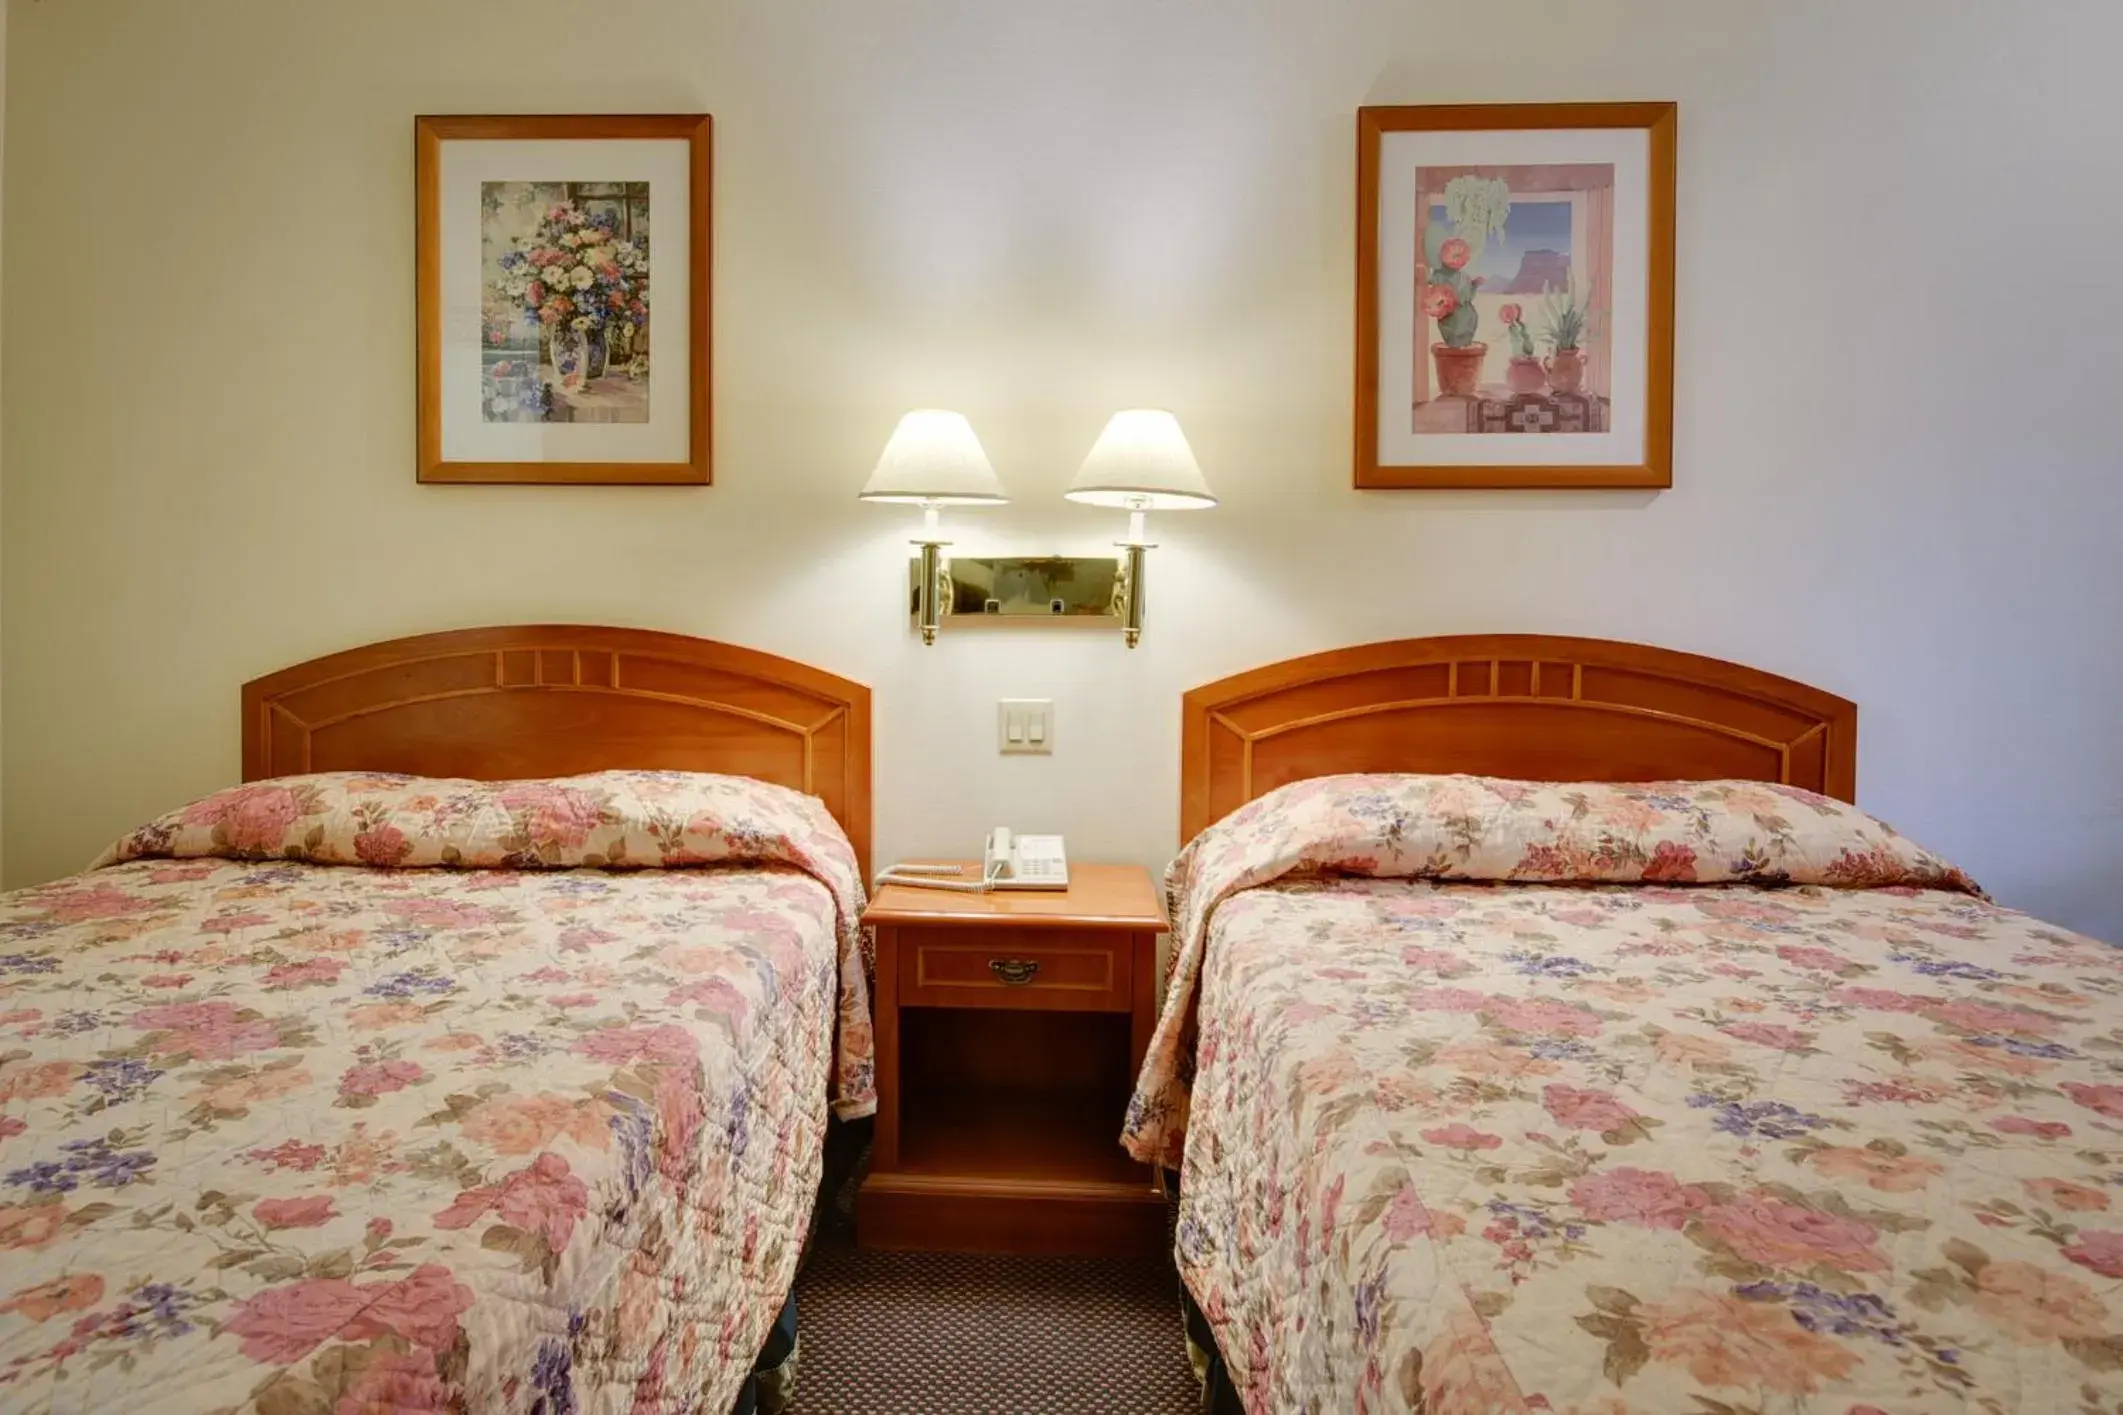 Bed, Room Photo in Vagabond Inn Hacienda Heights